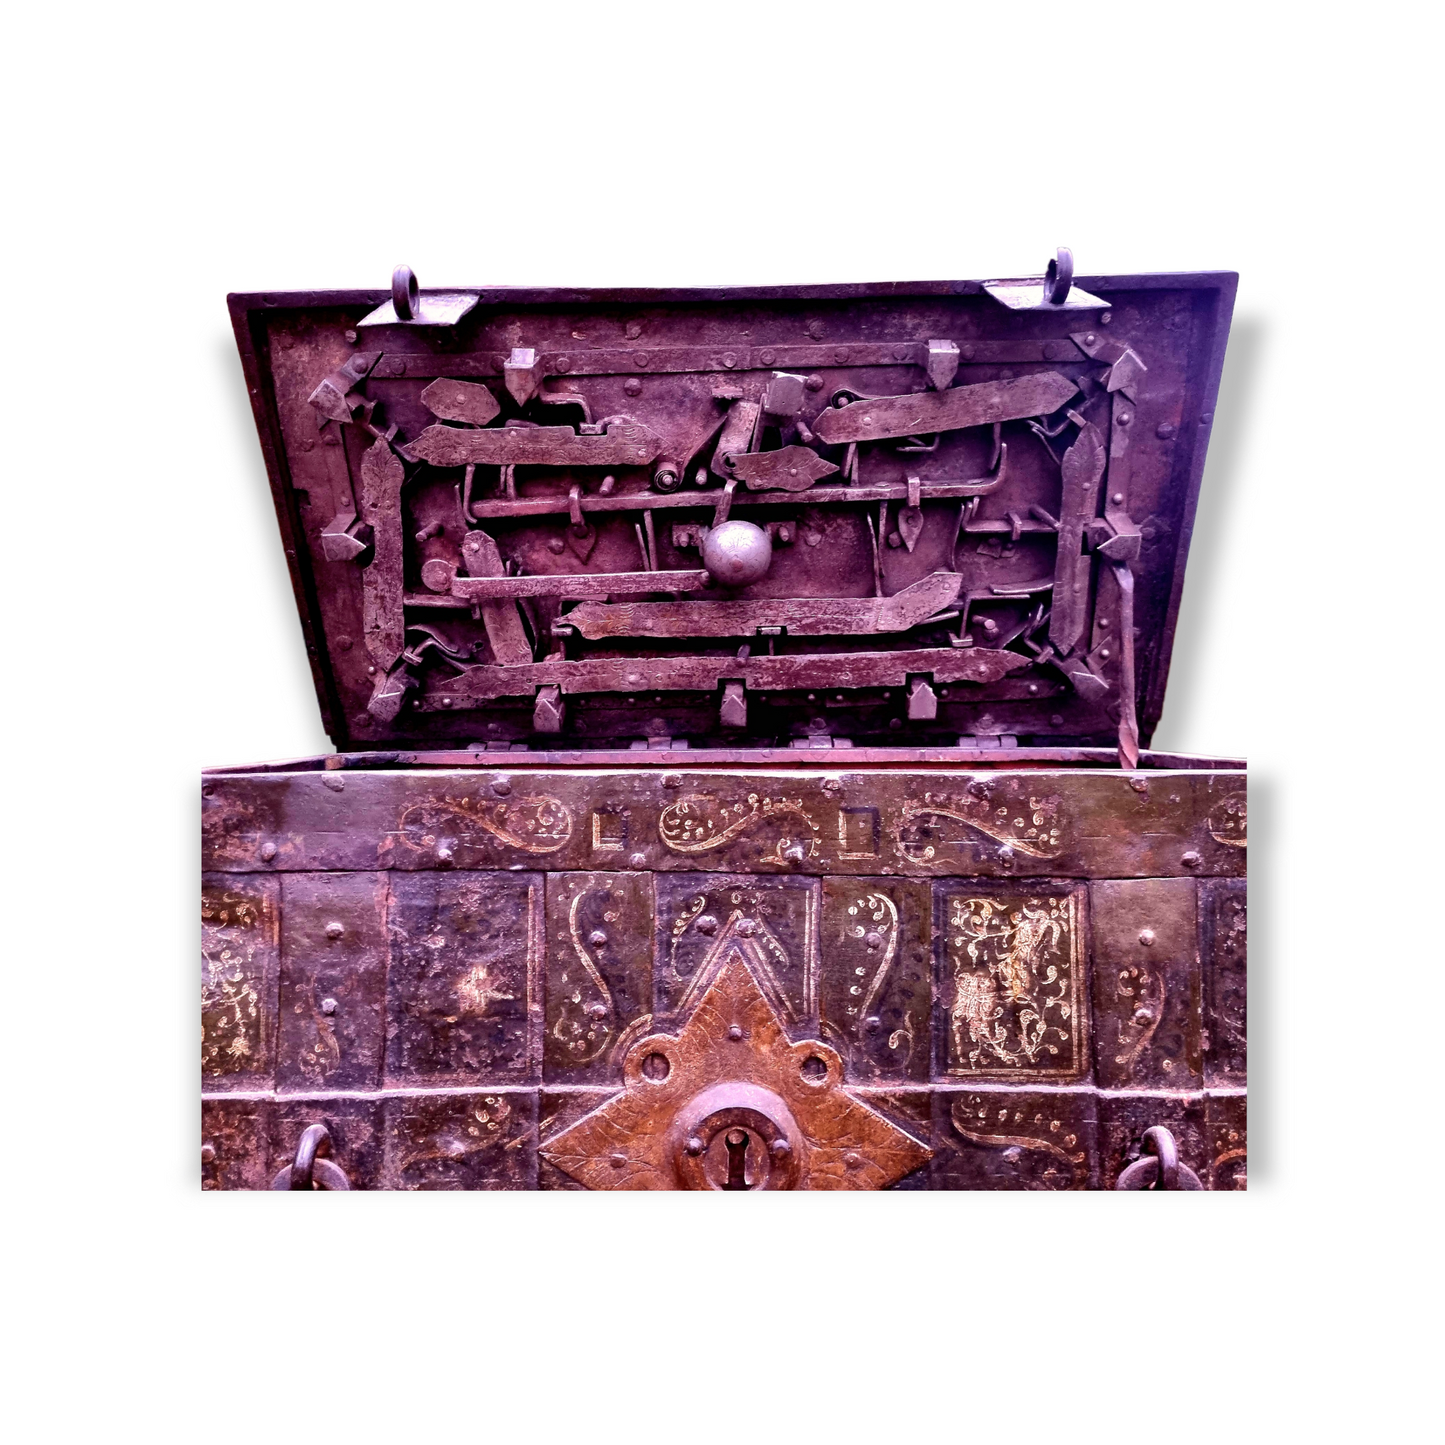 Mid 17th Century German Antique Iron Nuremberg-Made "Armada Chest" or Strongbox